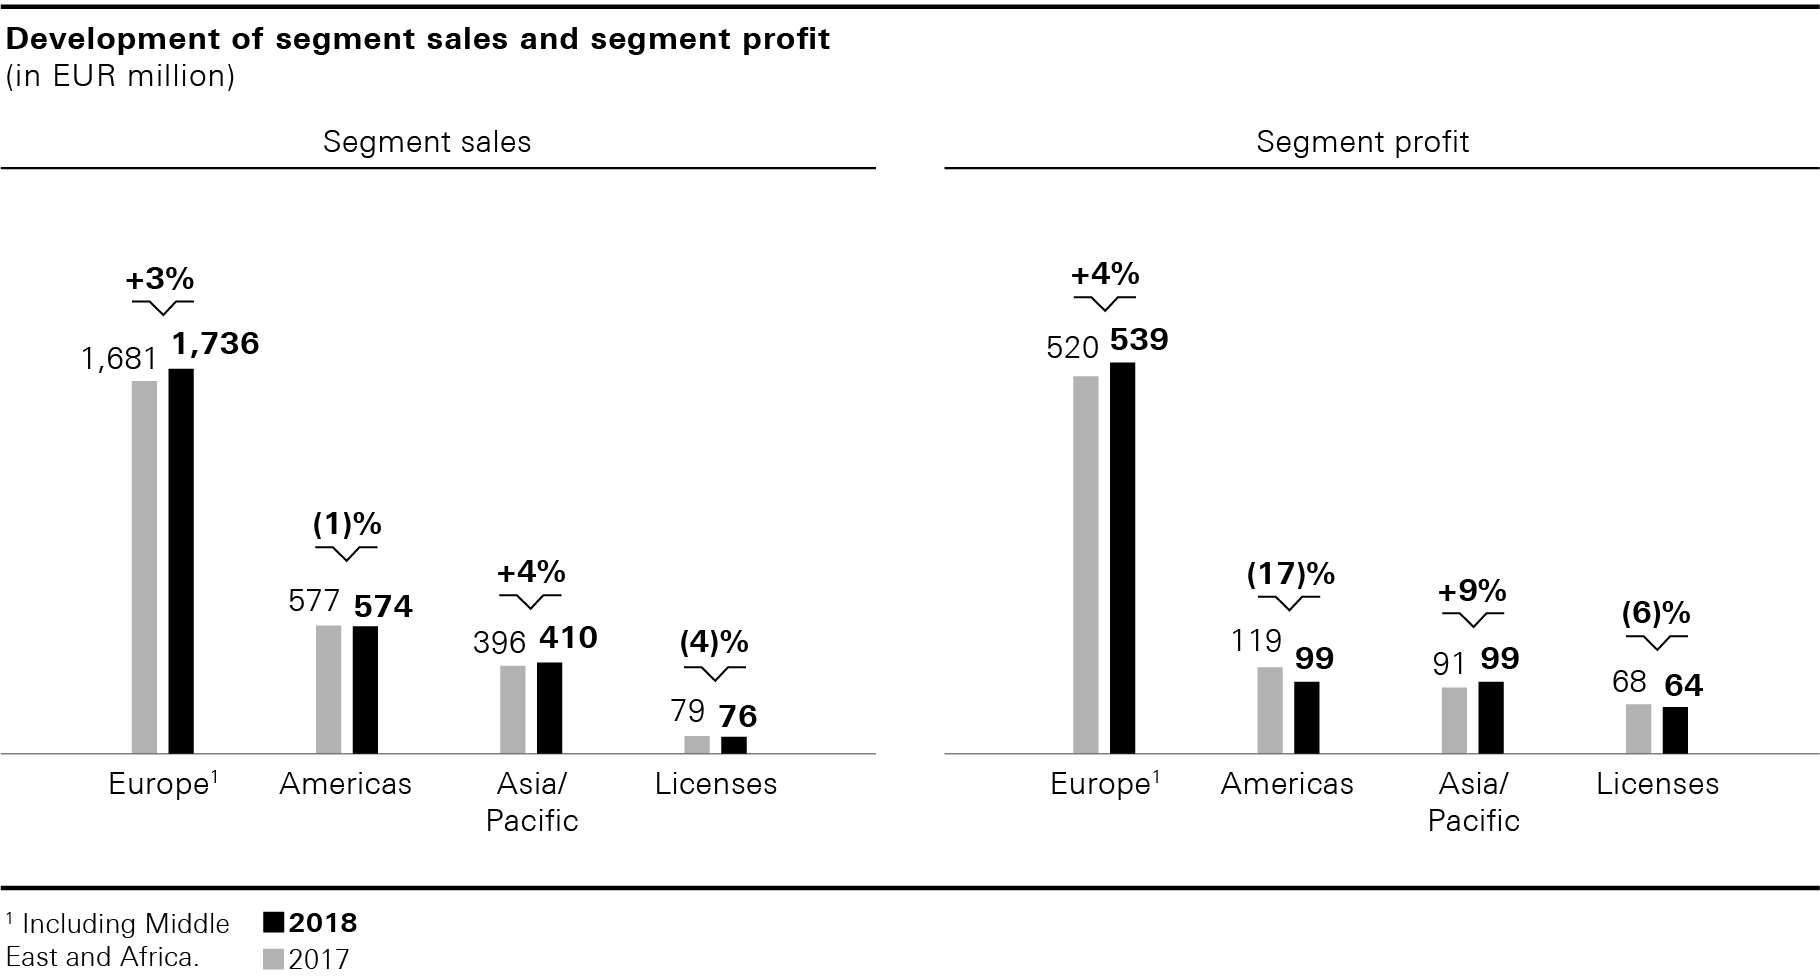 Development of segment sales and segment profit (bar chart)